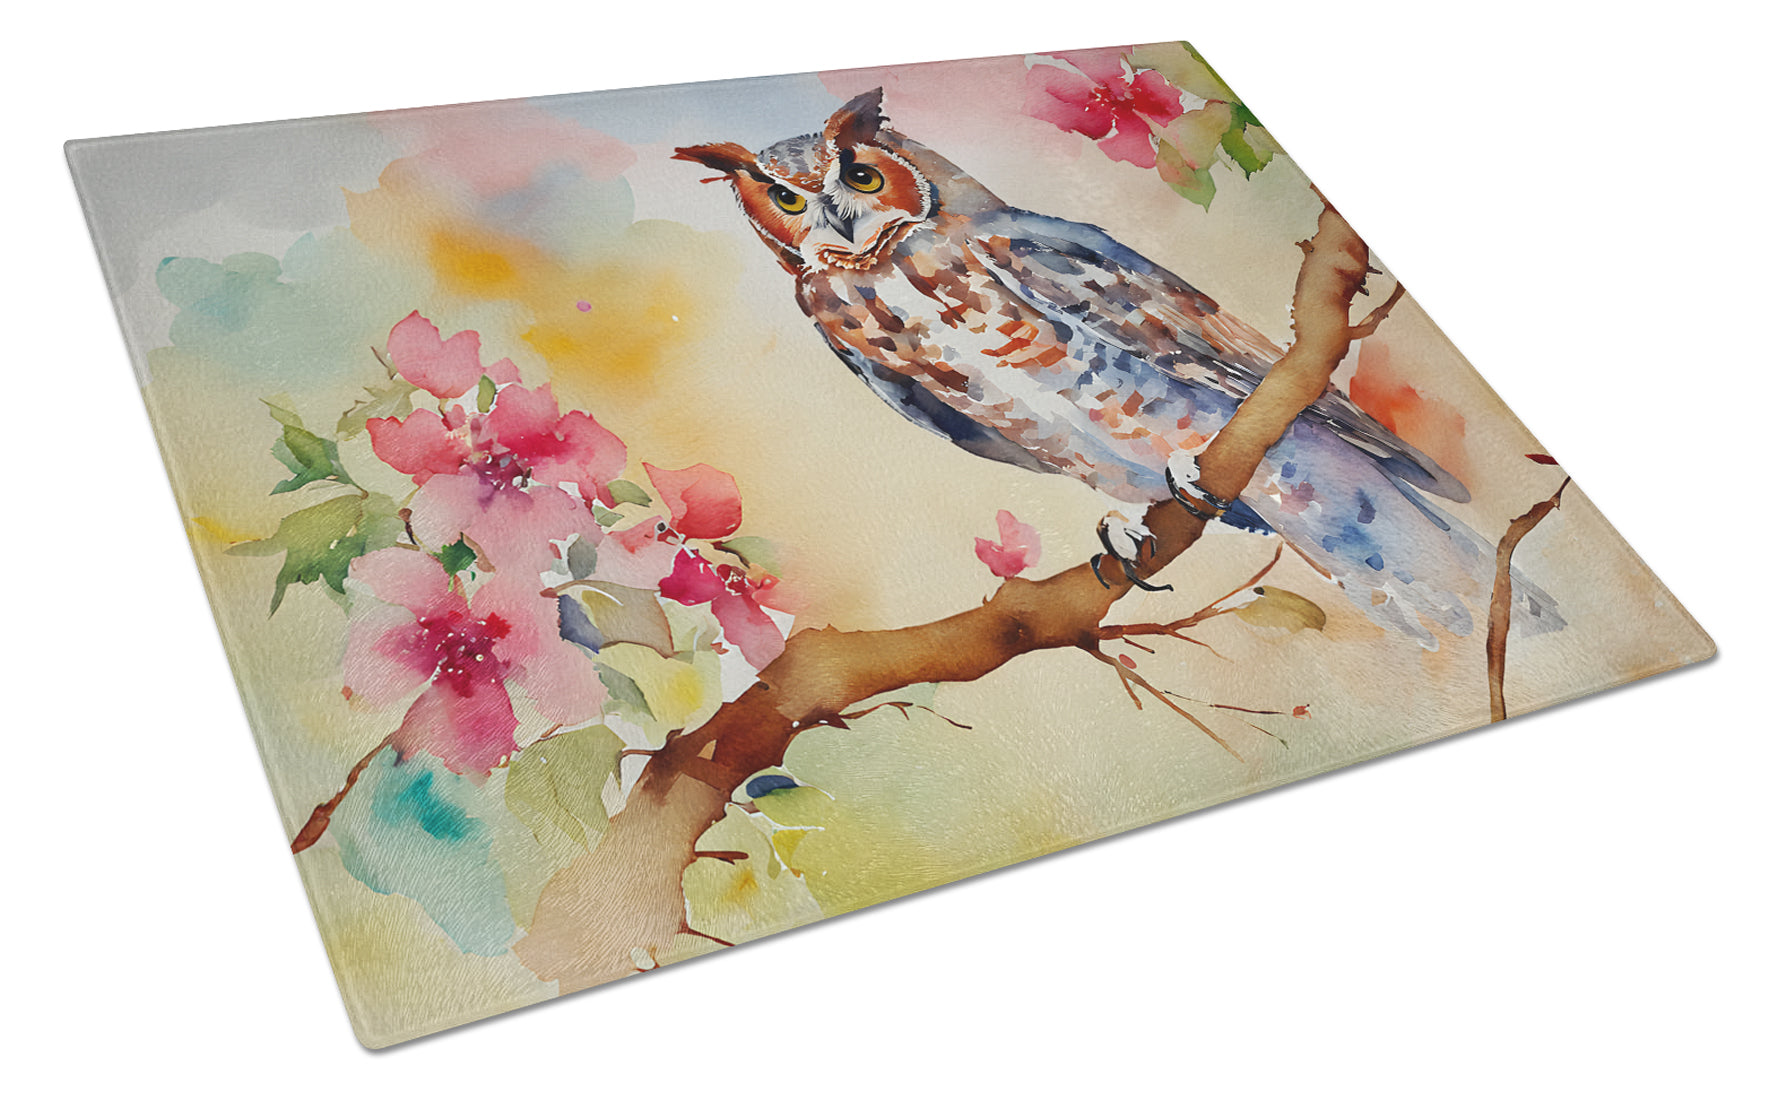 Buy this Eastern Screech Owl Glass Cutting Board